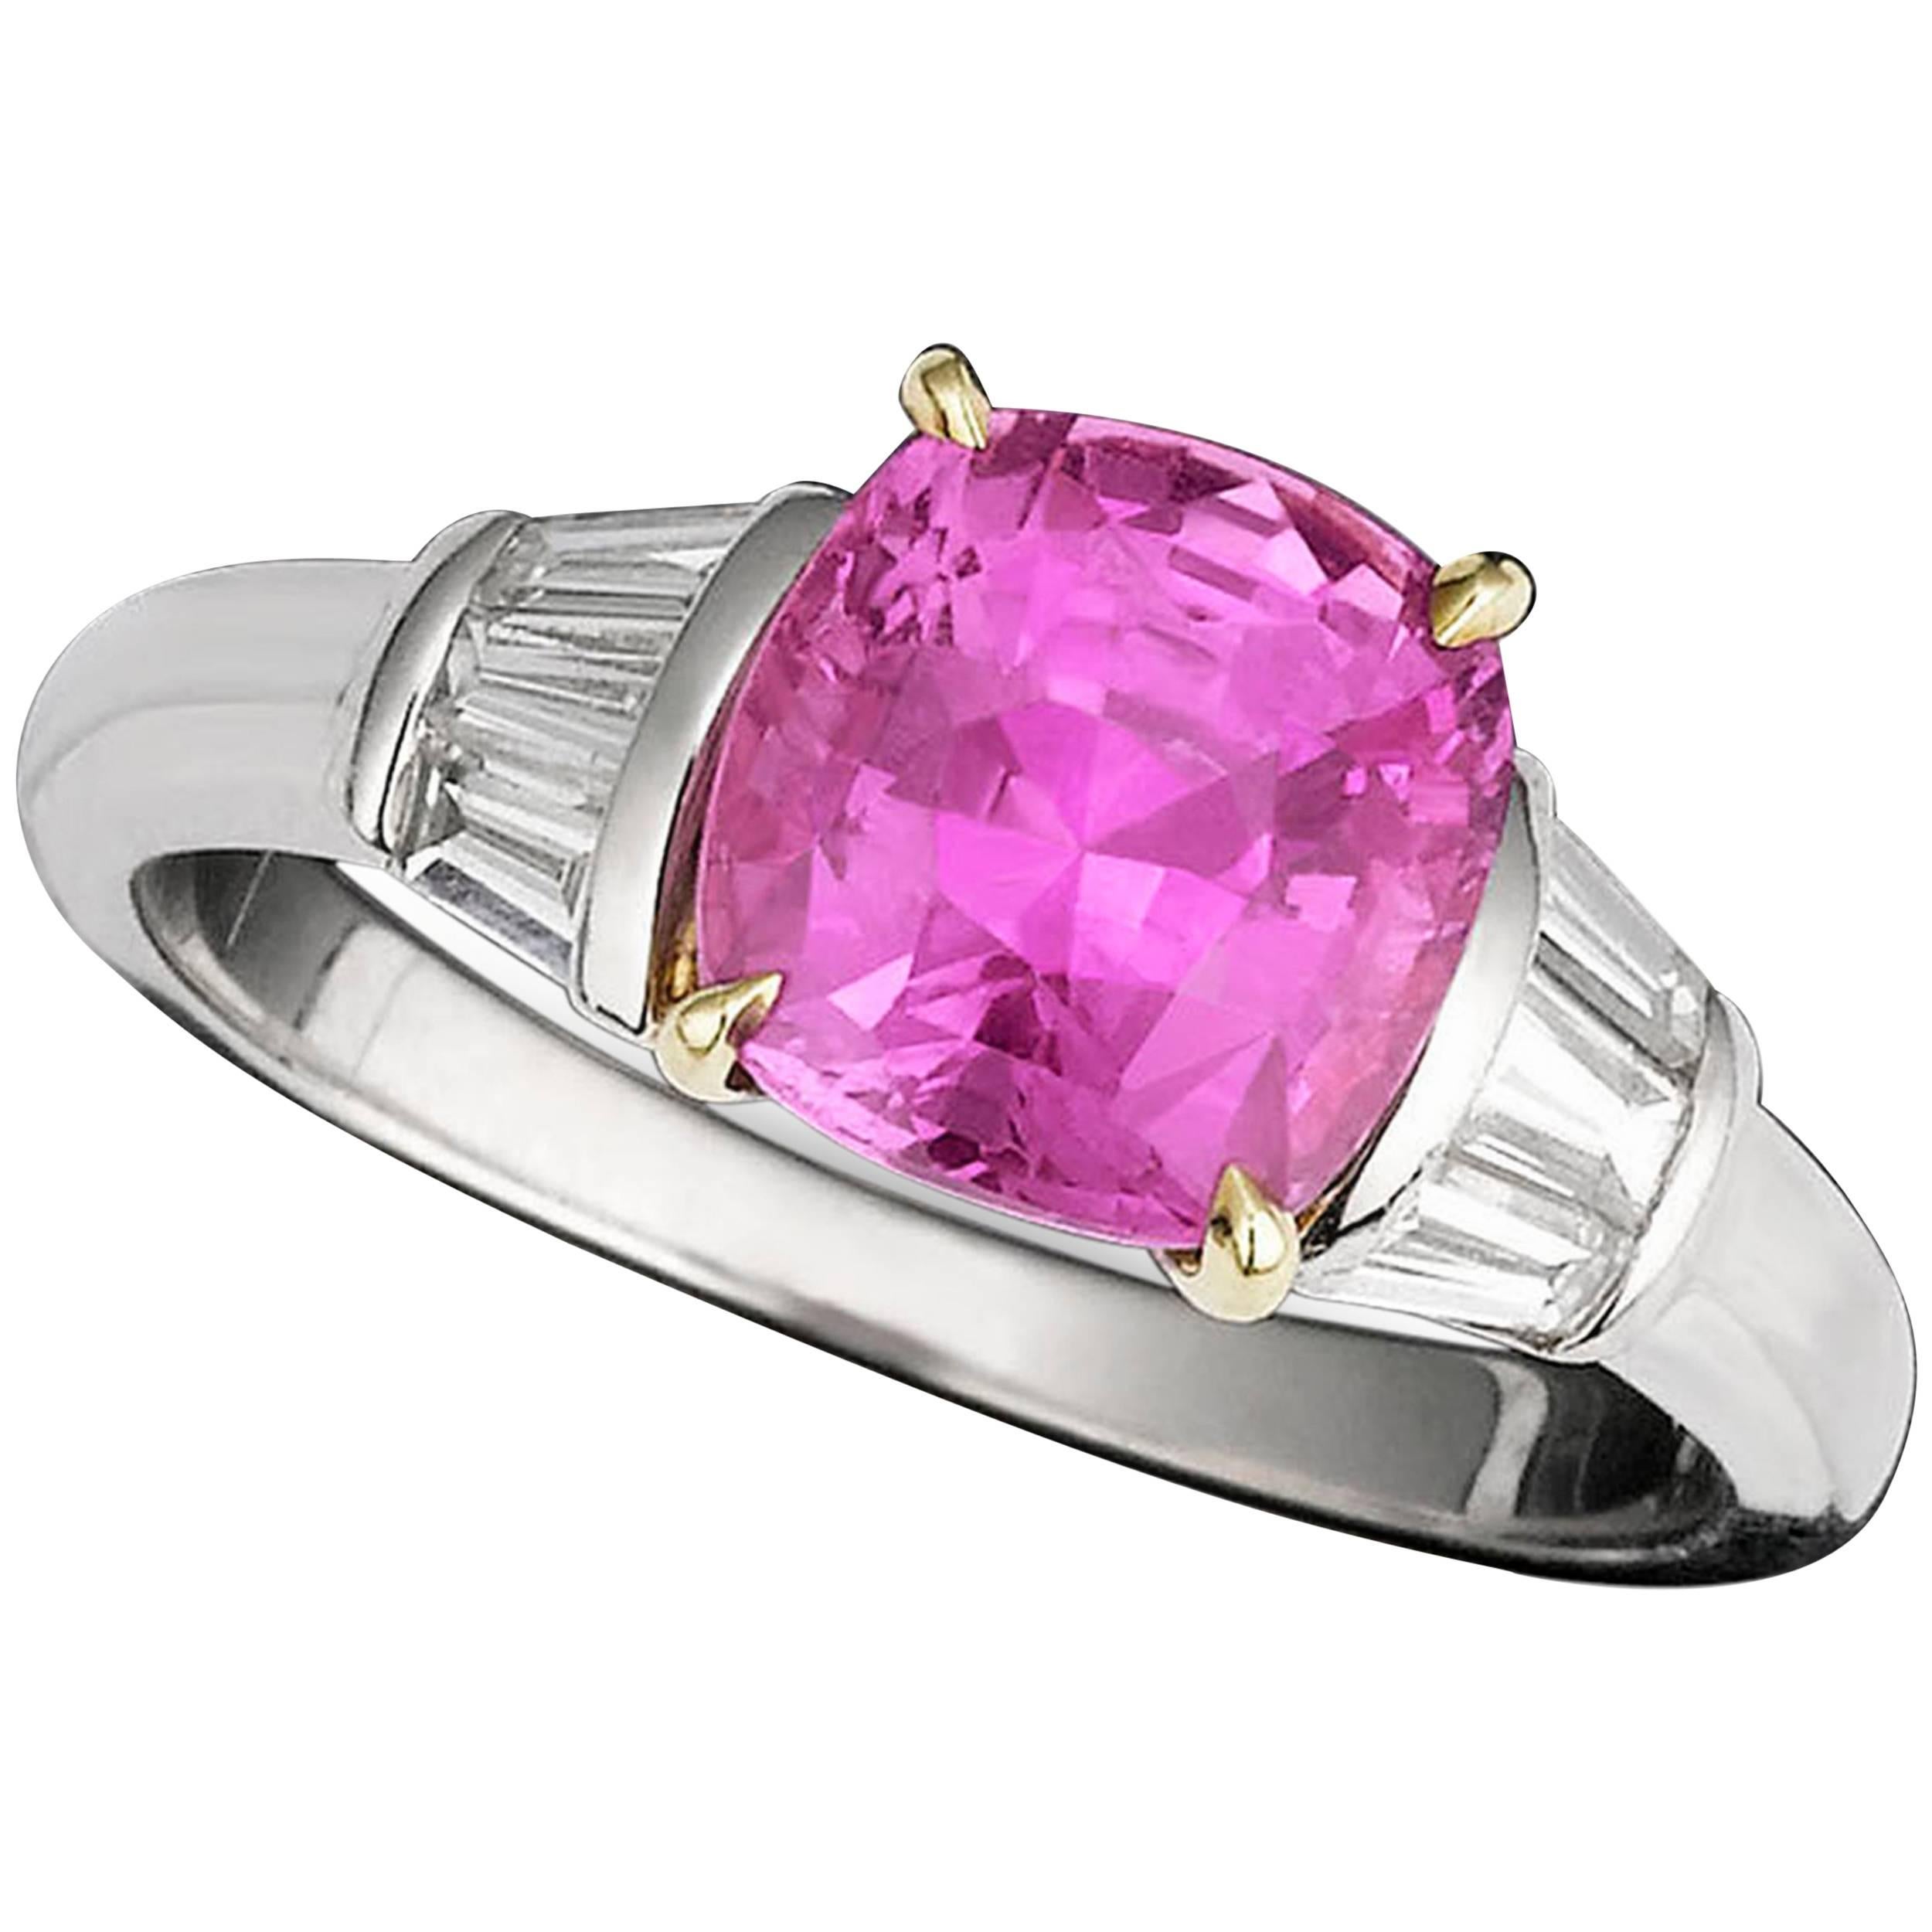 Untreated 2.79 Carat Pink Sapphire Diamond Ring